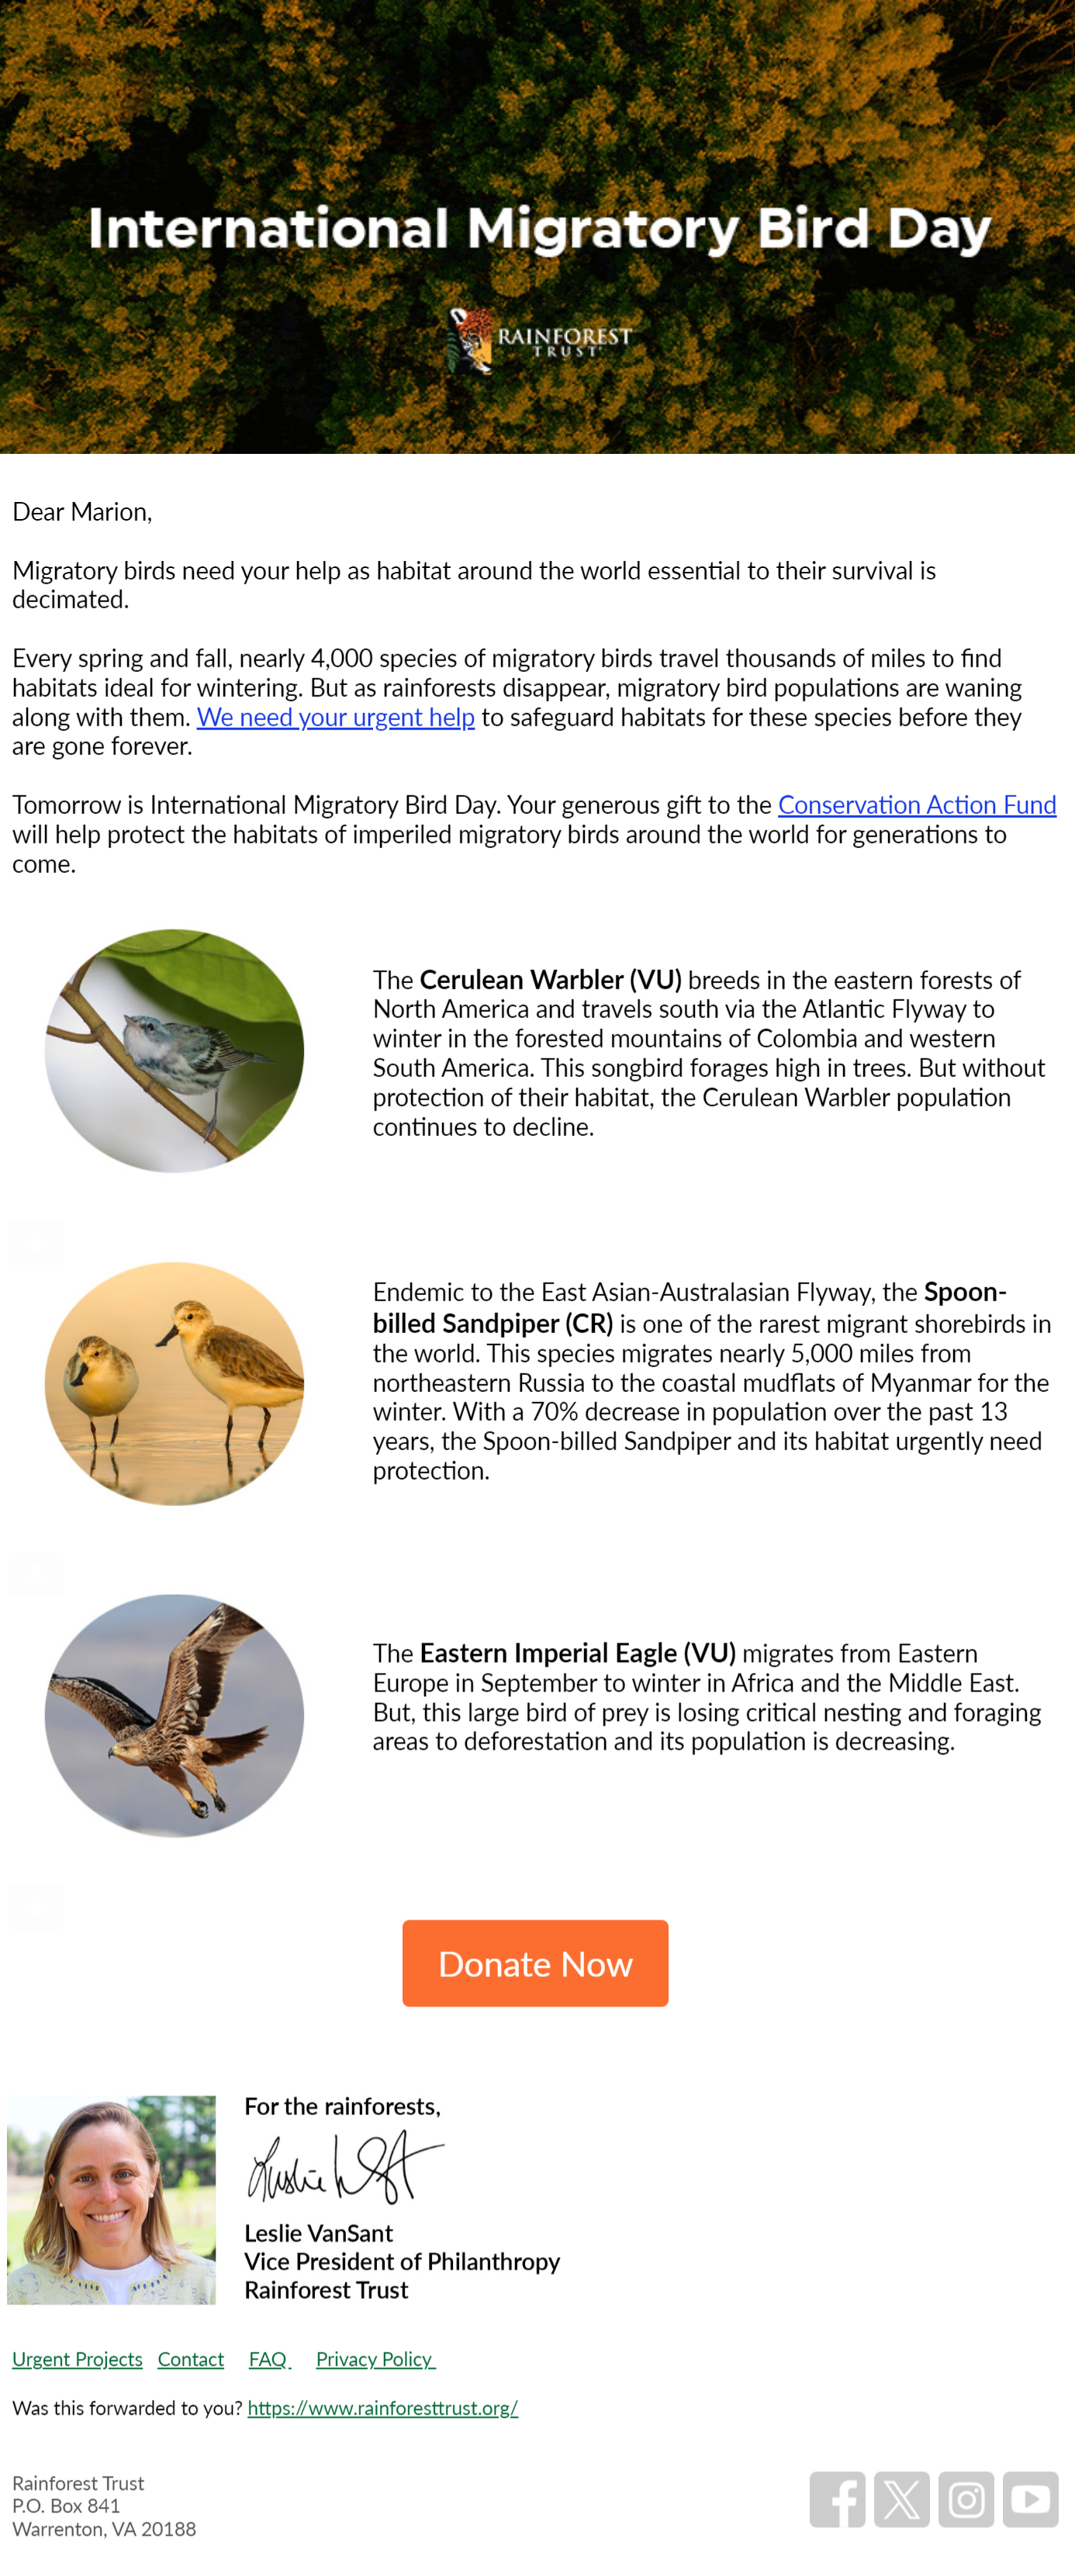 Migratory Birds Need Your Help